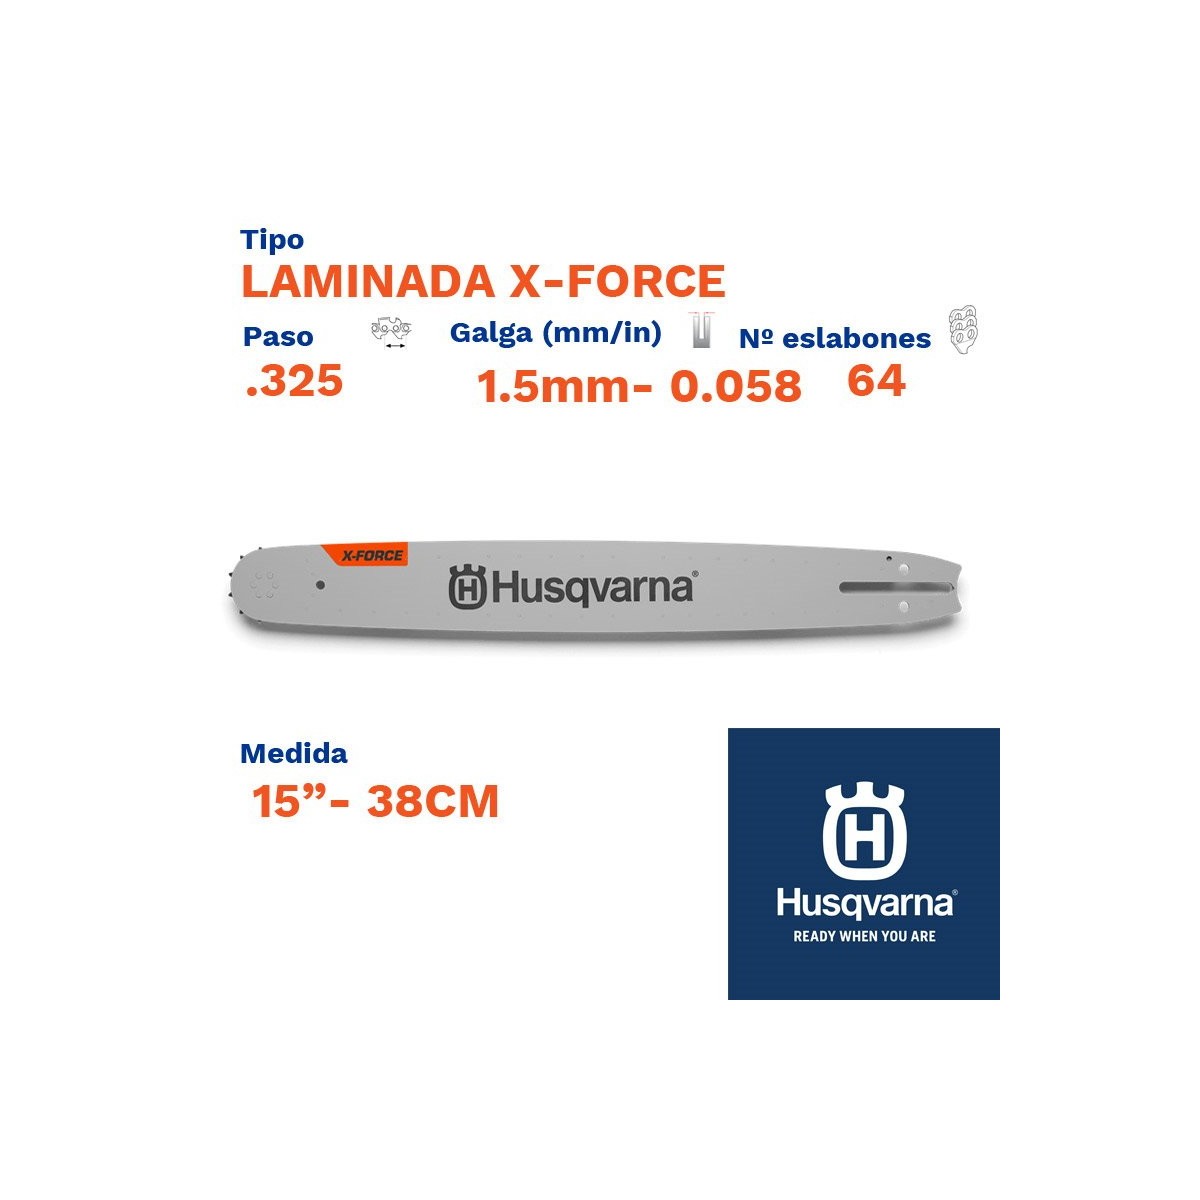 Husqvarna espada laminada x-force 1.5mm 64 eslabones-pc .325  15"- 38cm